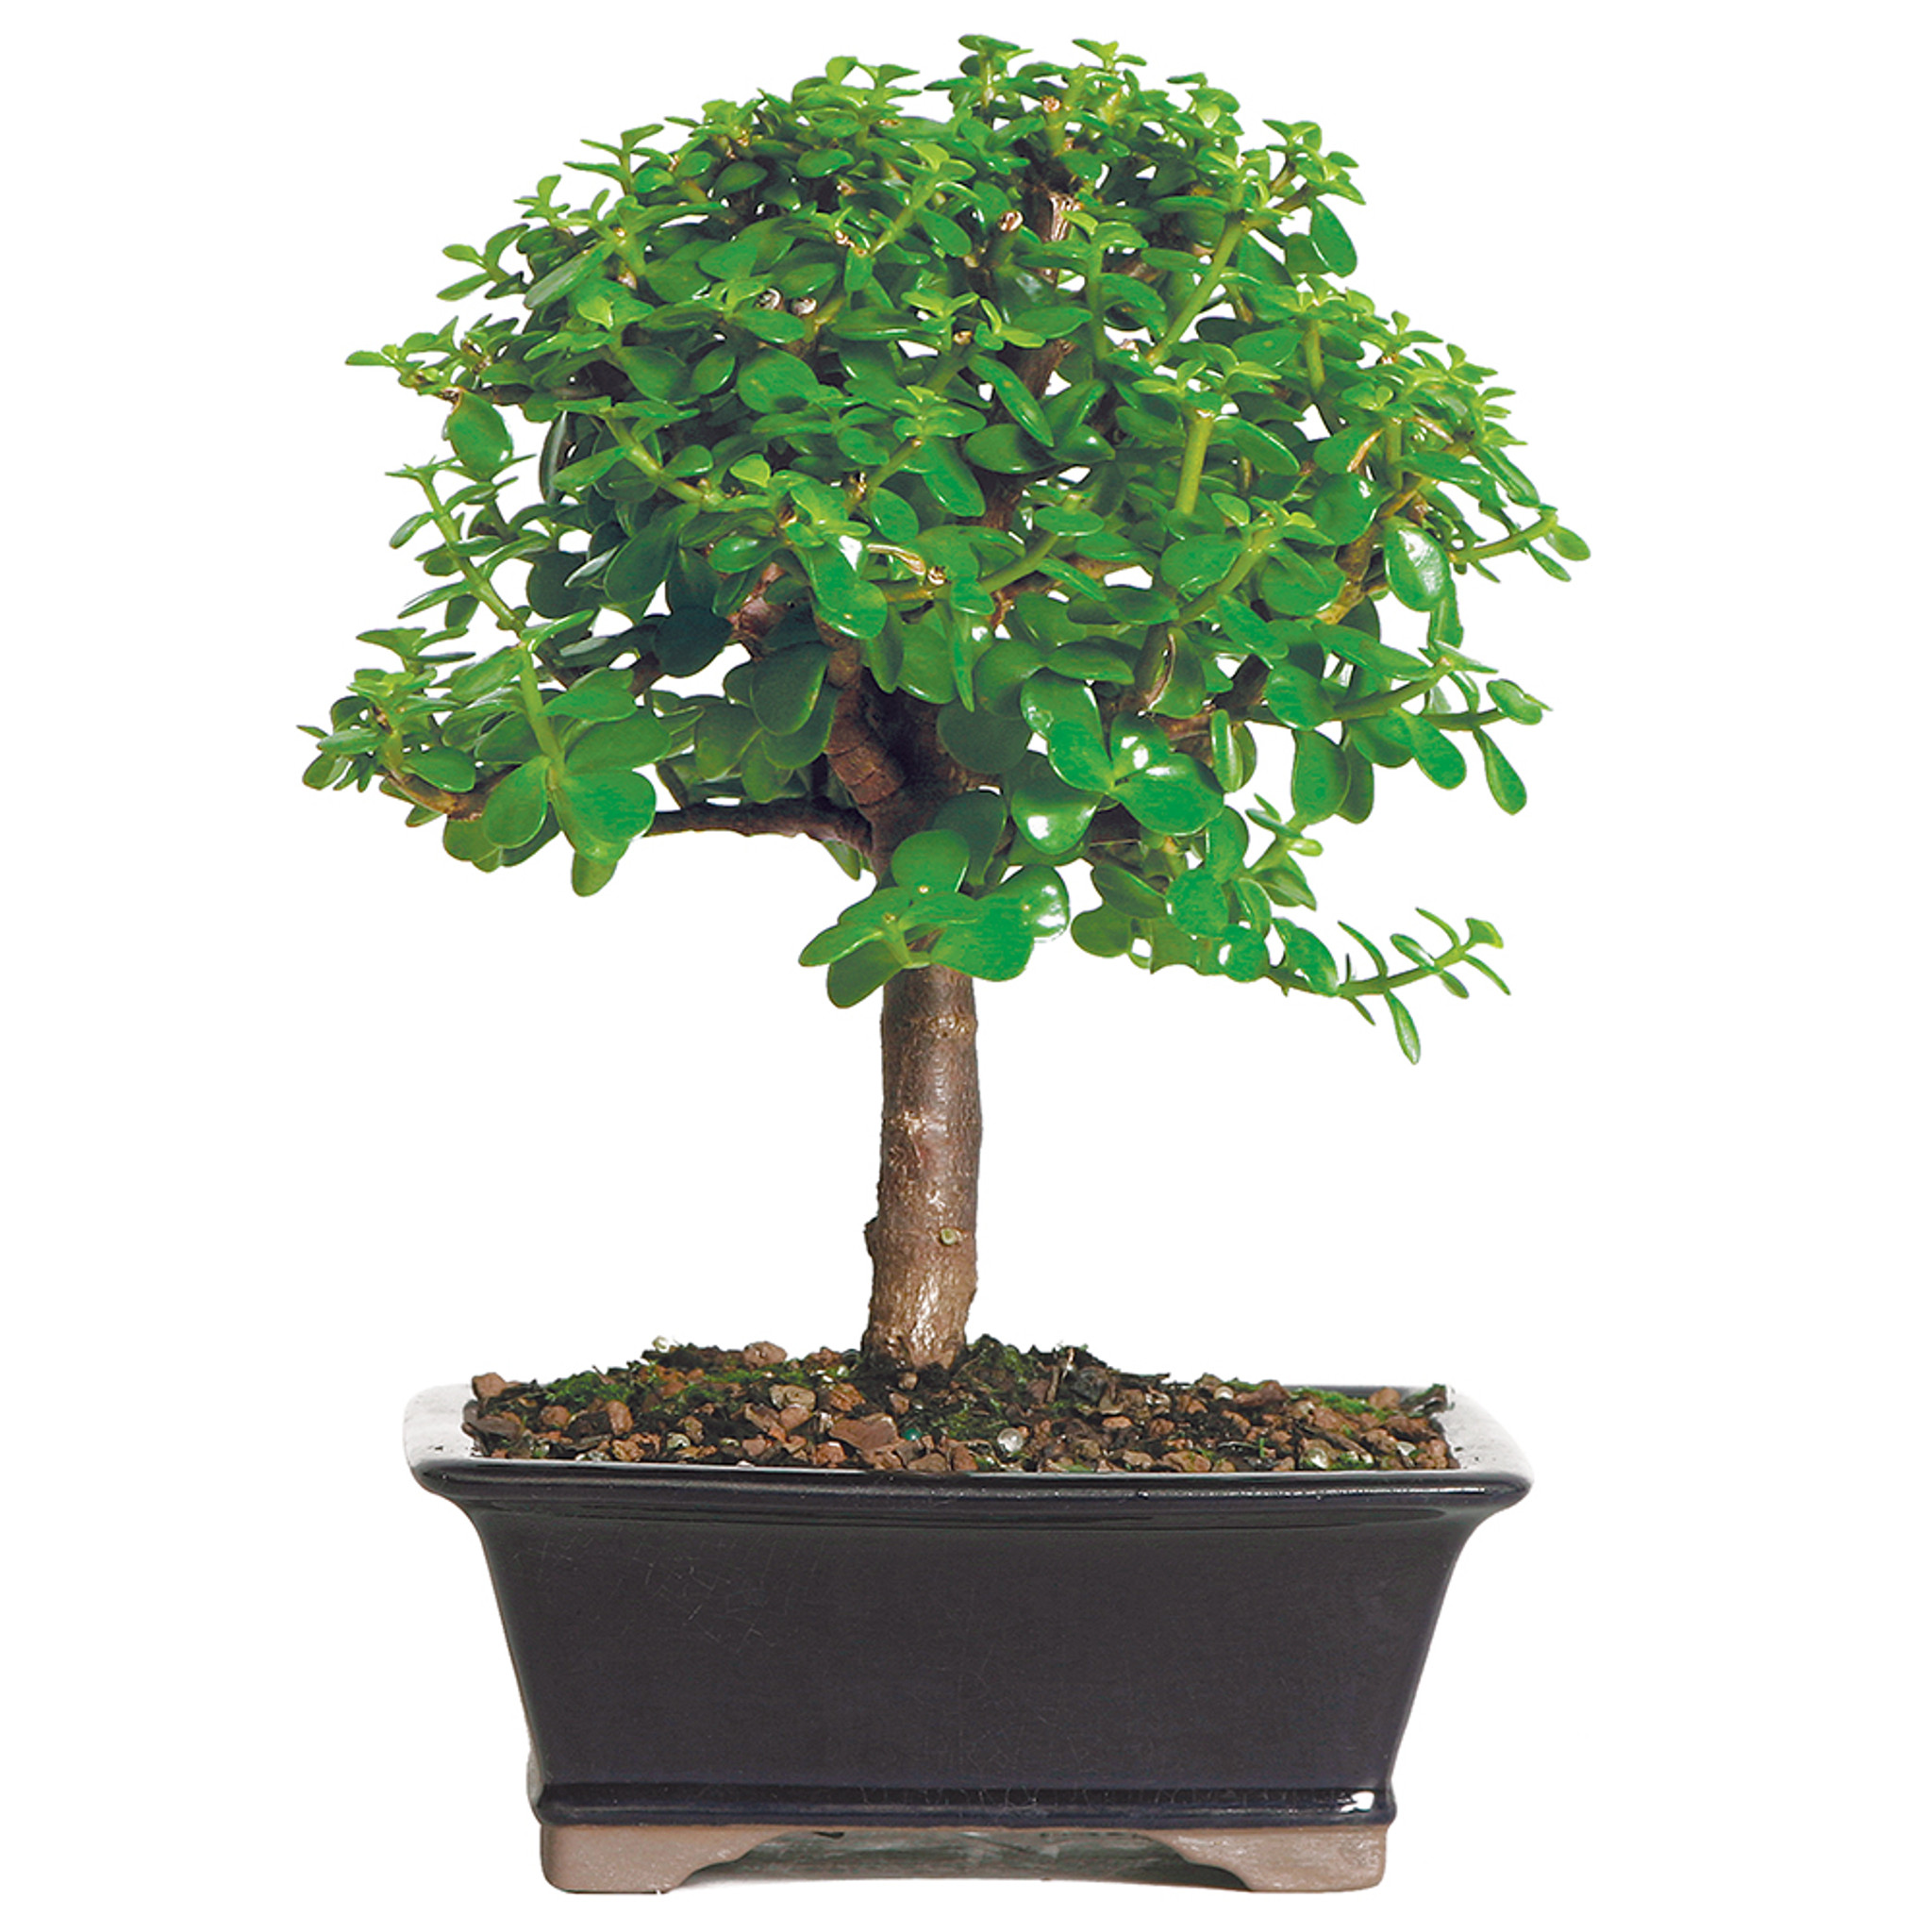 Portulacaria afra bonsai in small rectangular container.